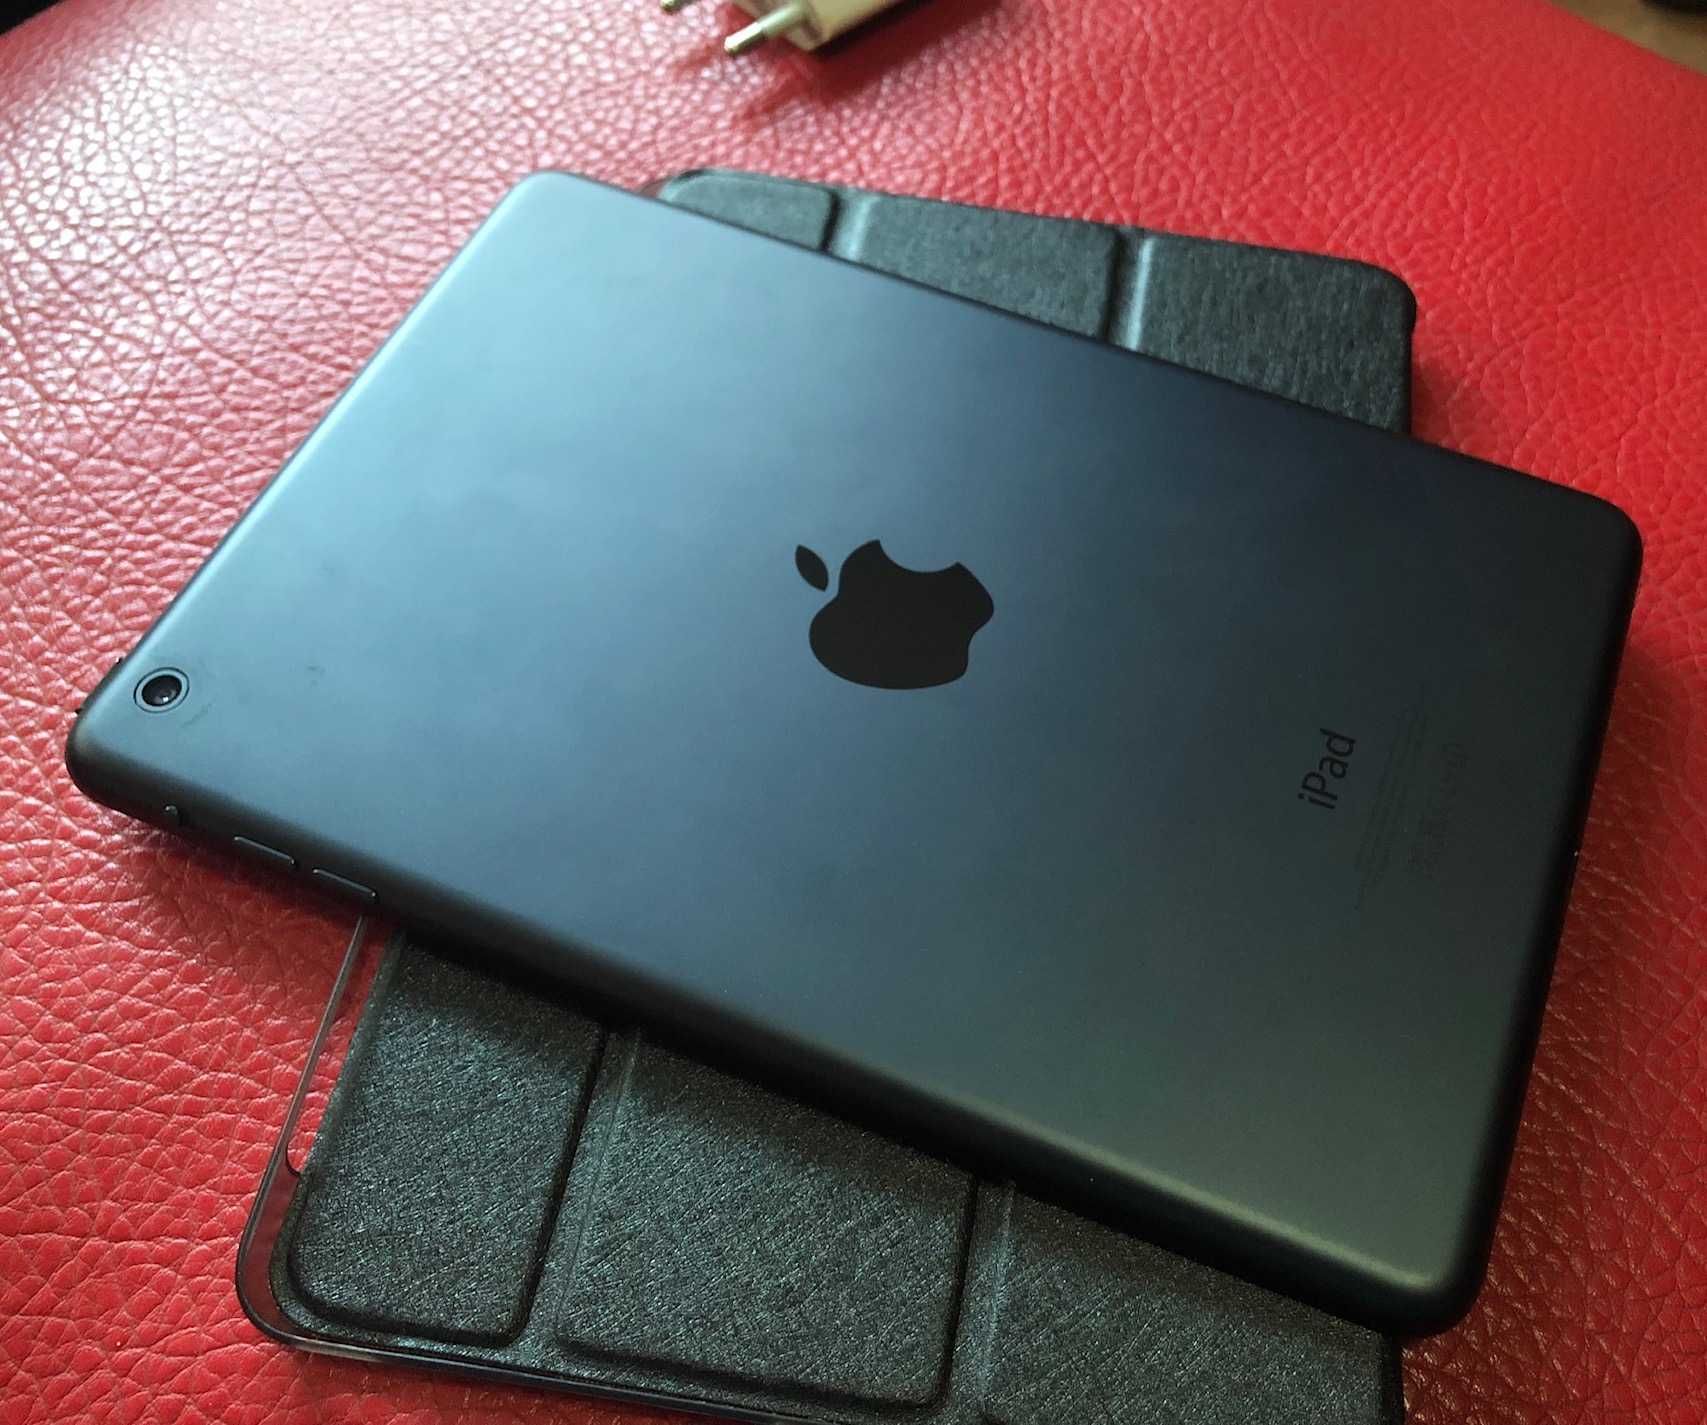 Apple iPad Мini 16GB WiFi черен Модел А1432